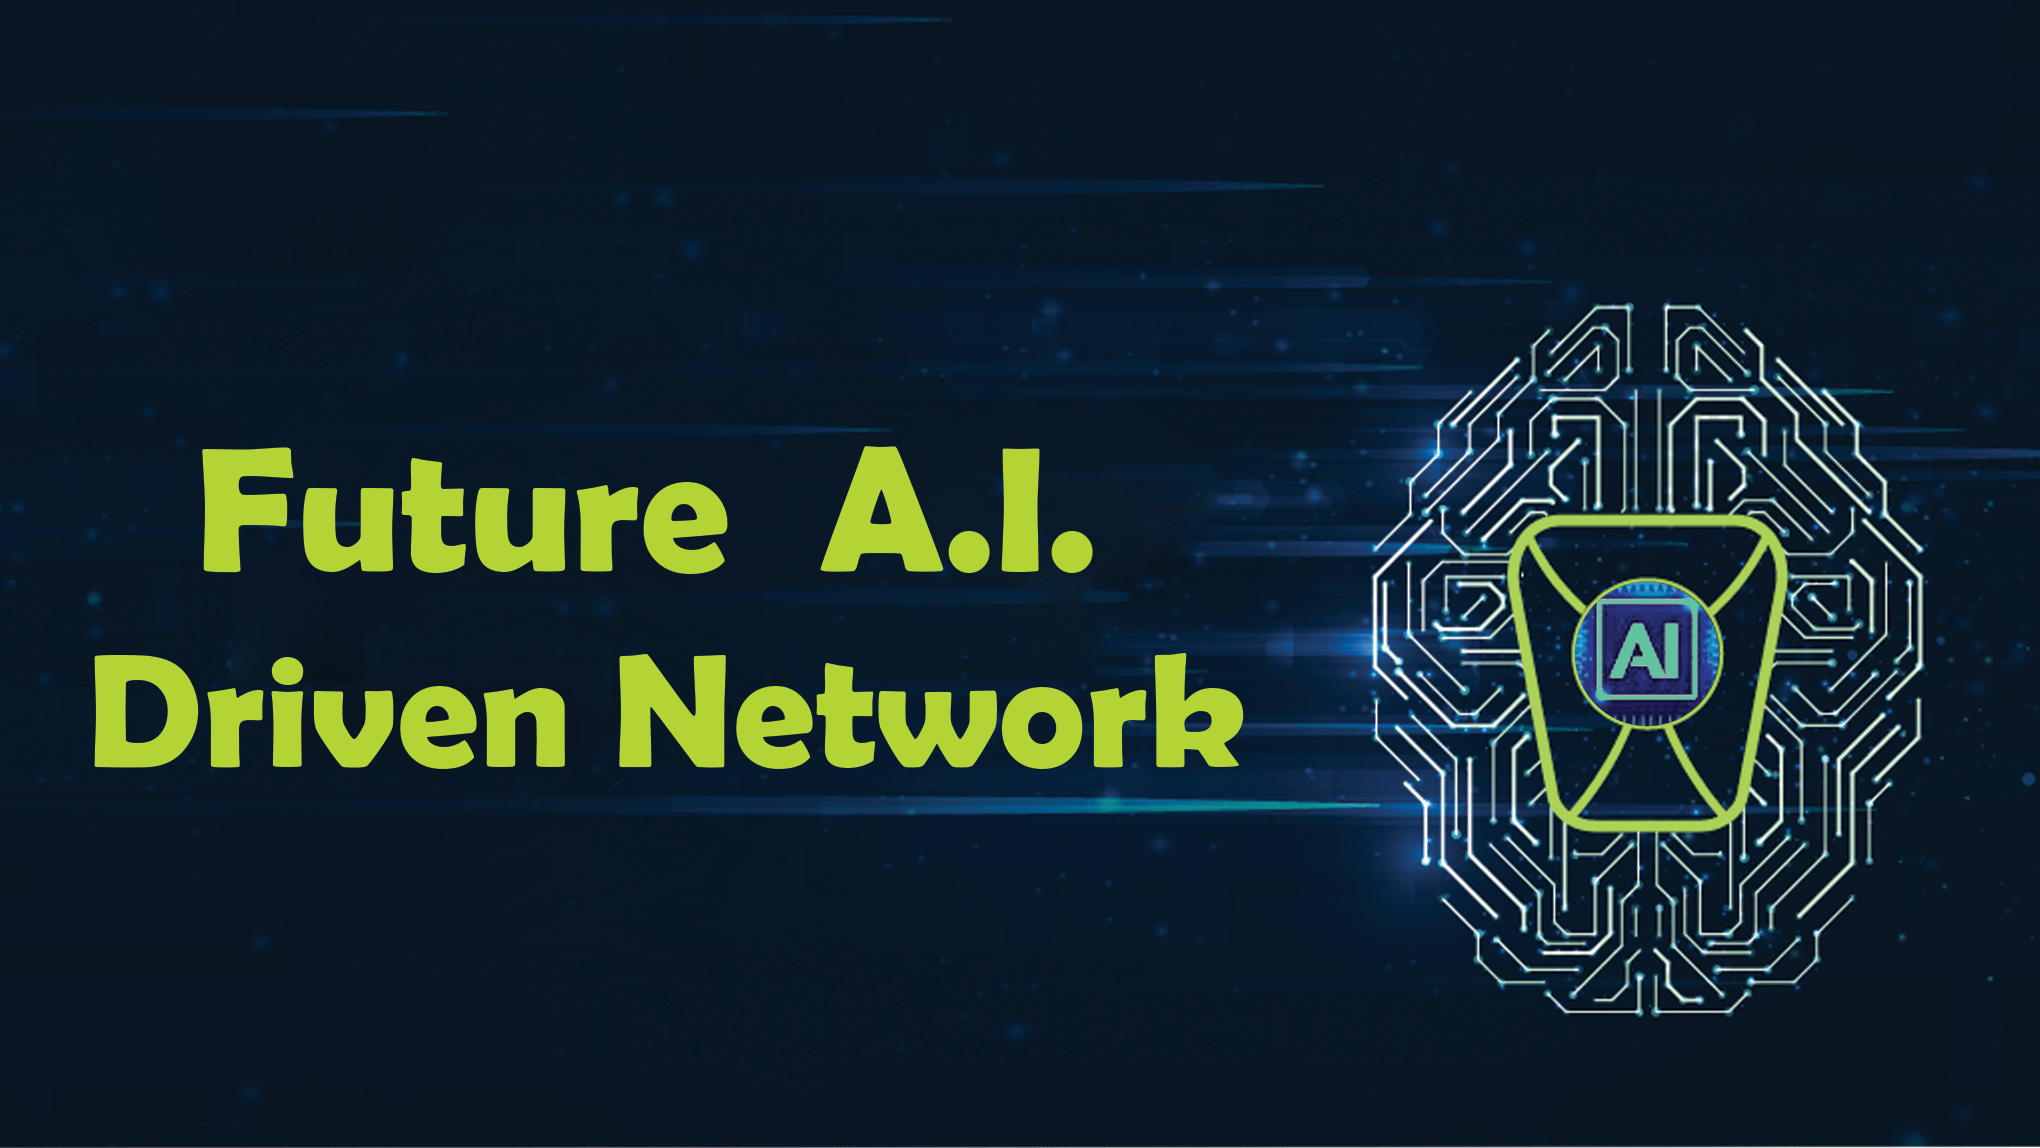 Future A.I. Driven Network